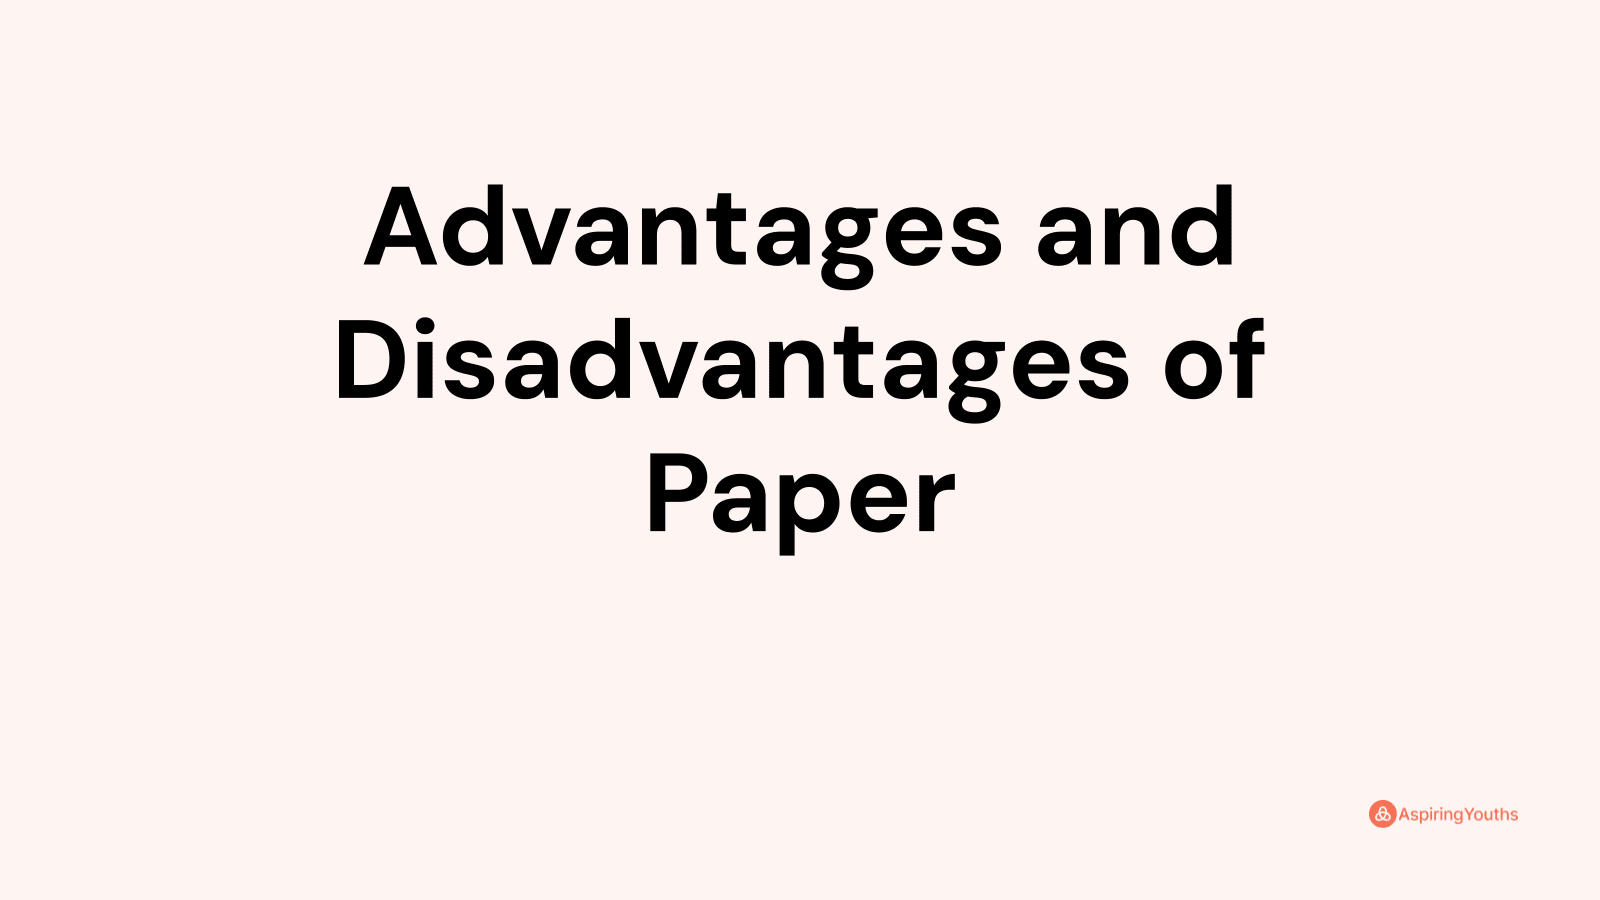 Advantages and disadvantages of Paper